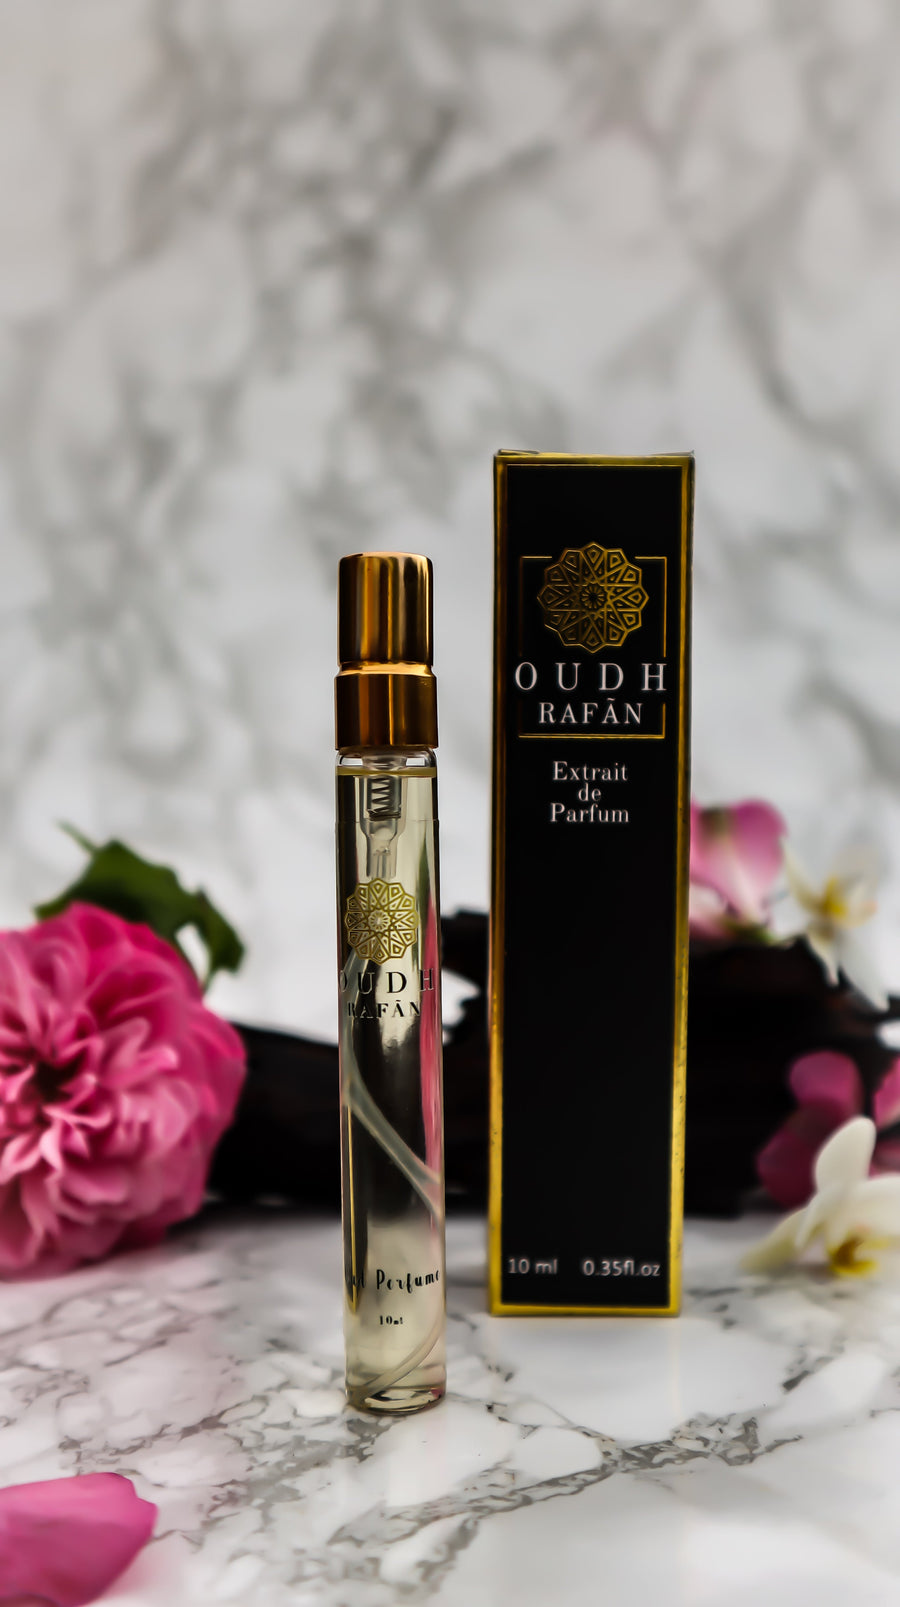 Cairo - Luxury perfume in discovery size bottle 10ml - Bergamot, rose & oud